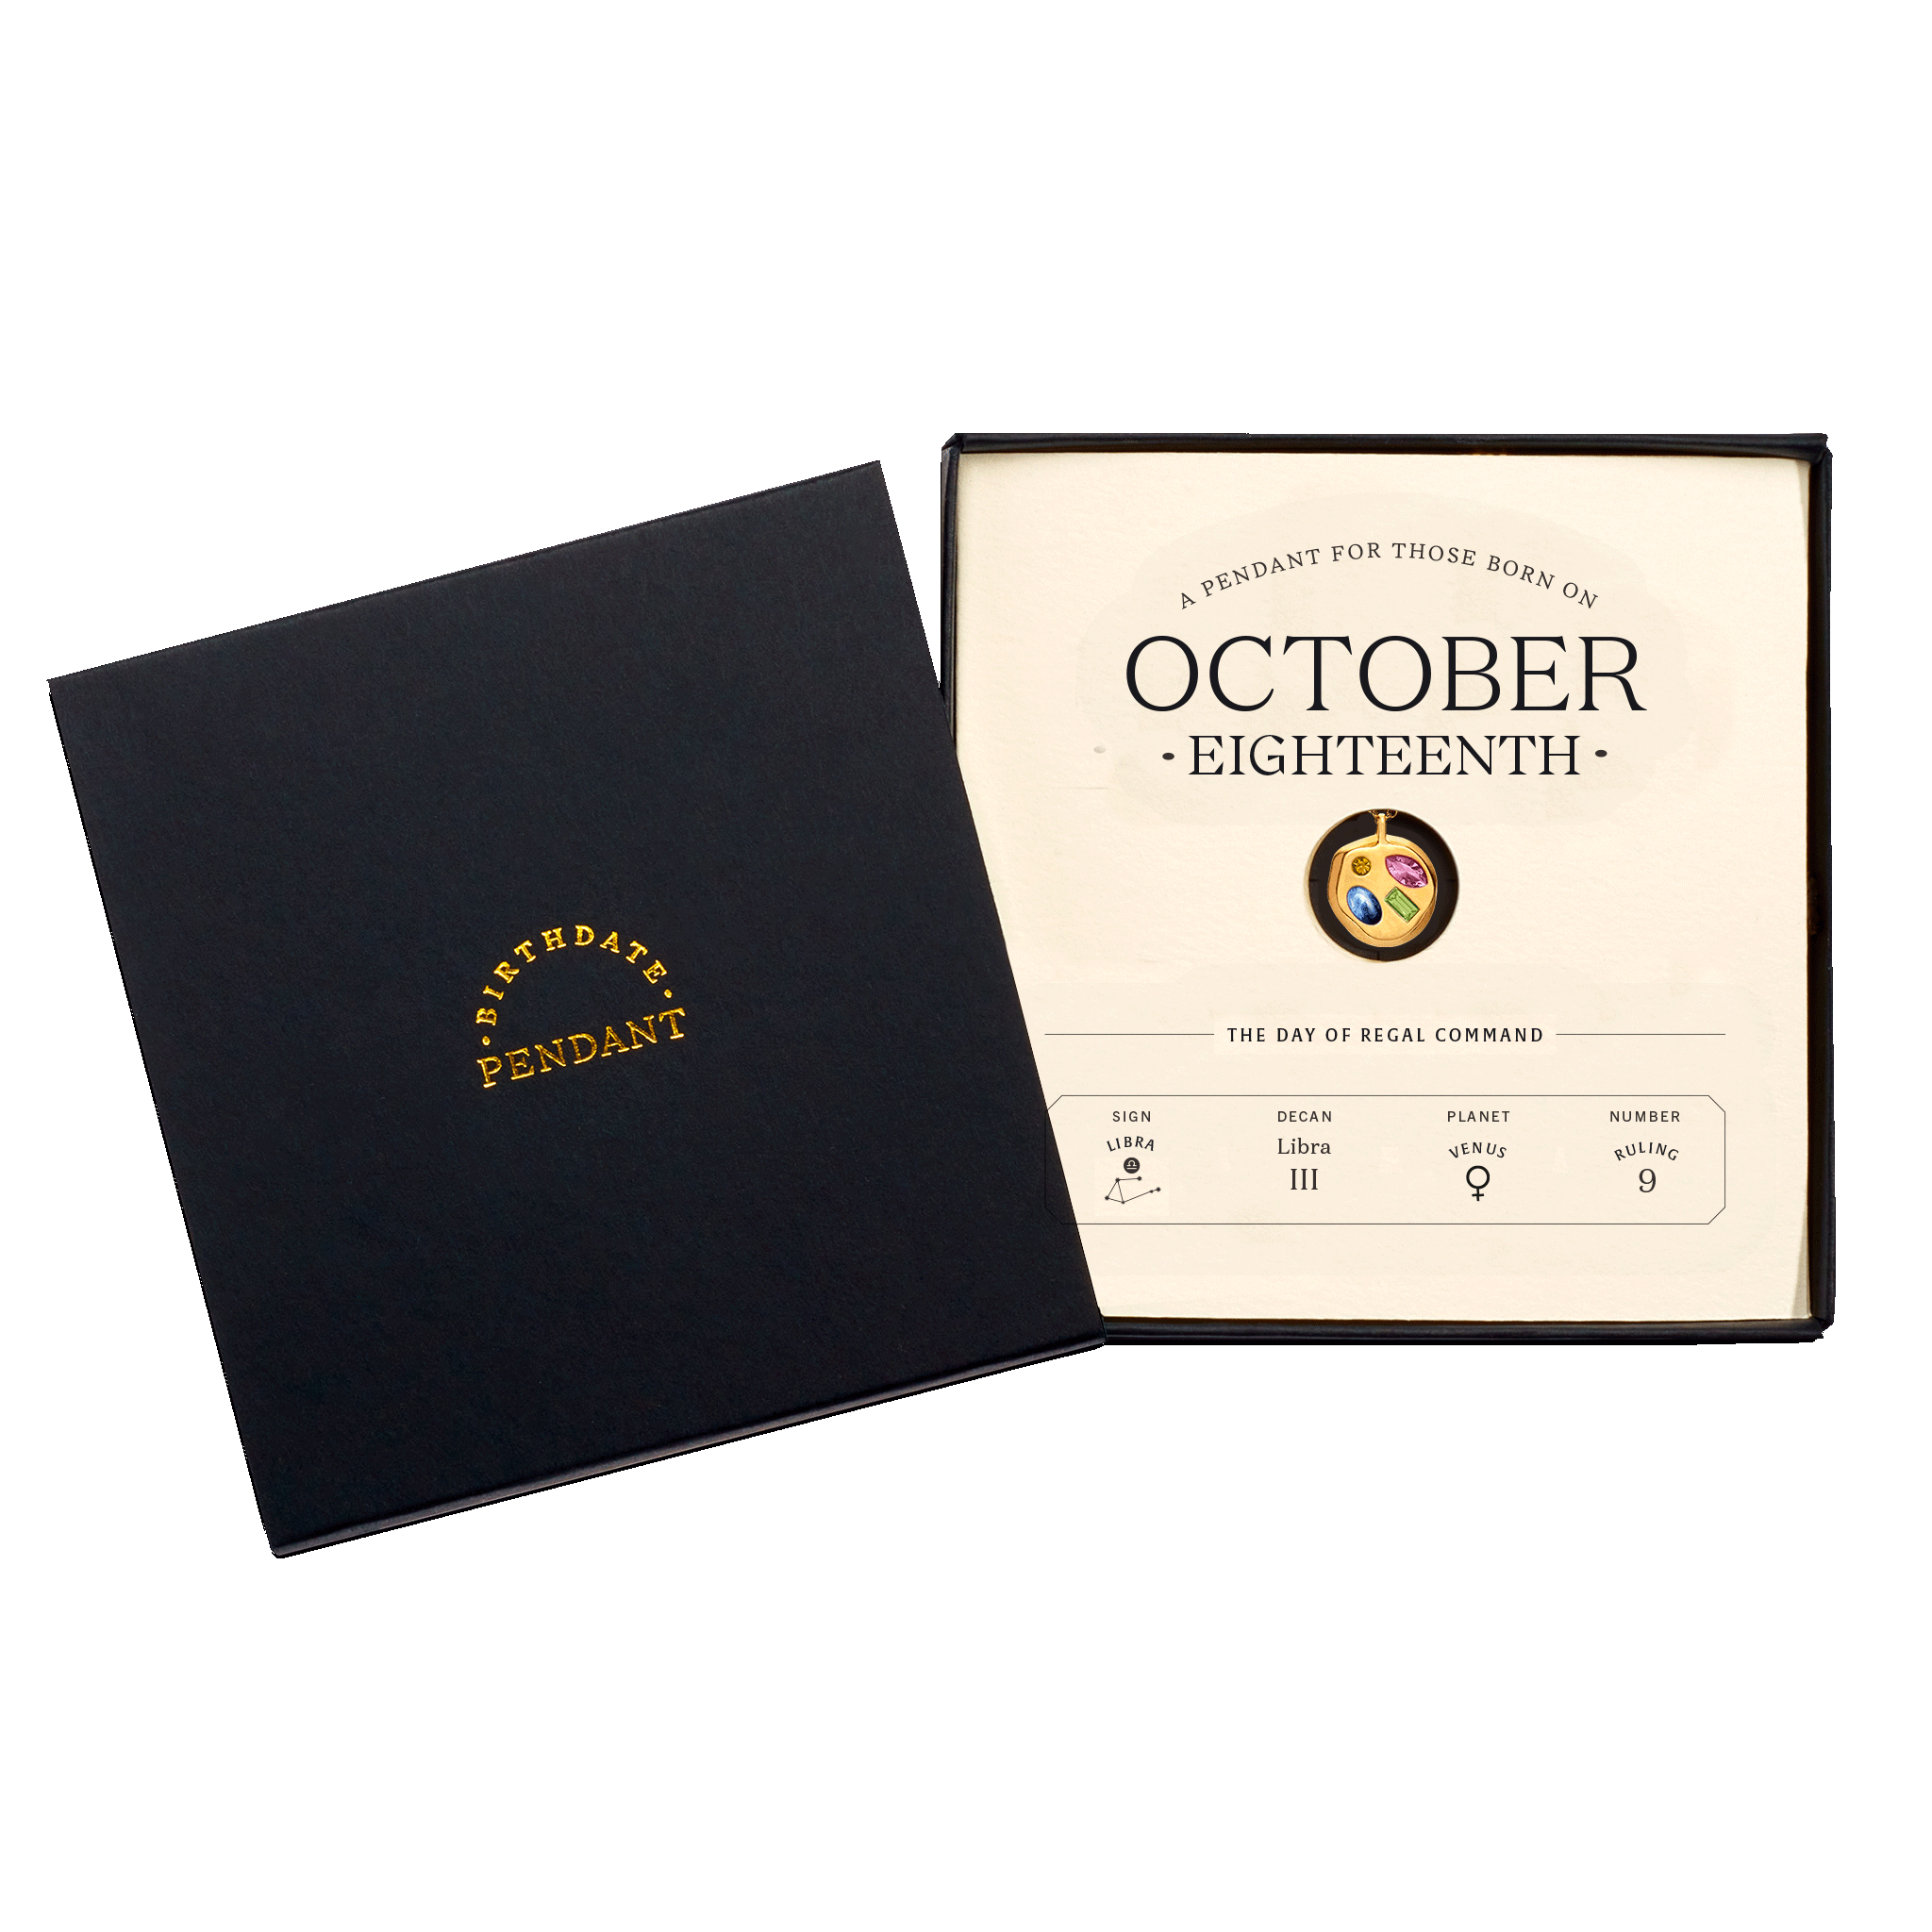 The October Eighteenth Pendant inside its box